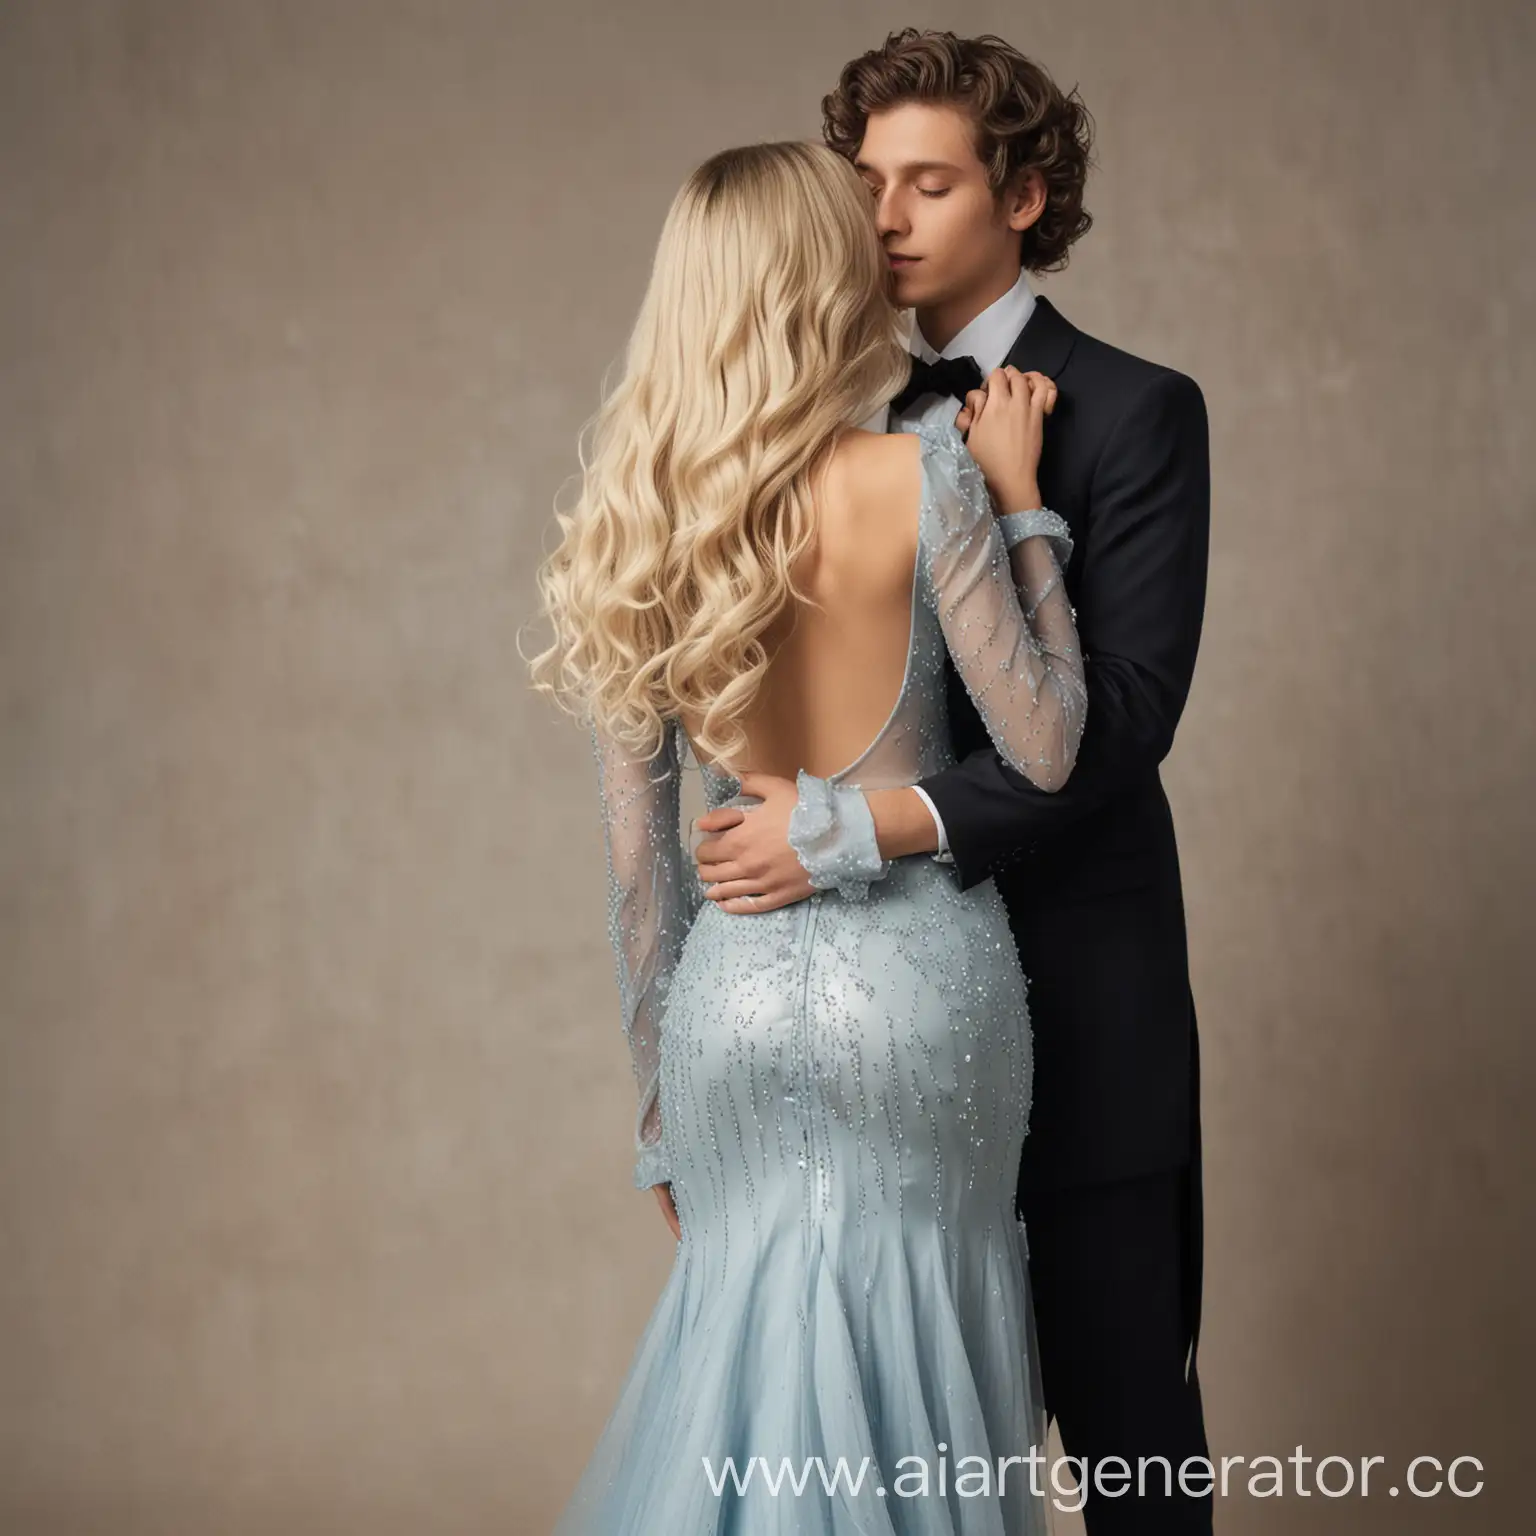 Elegant-Couple-Embracing-Romantic-Scene-with-Stylishly-Dressed-Pair